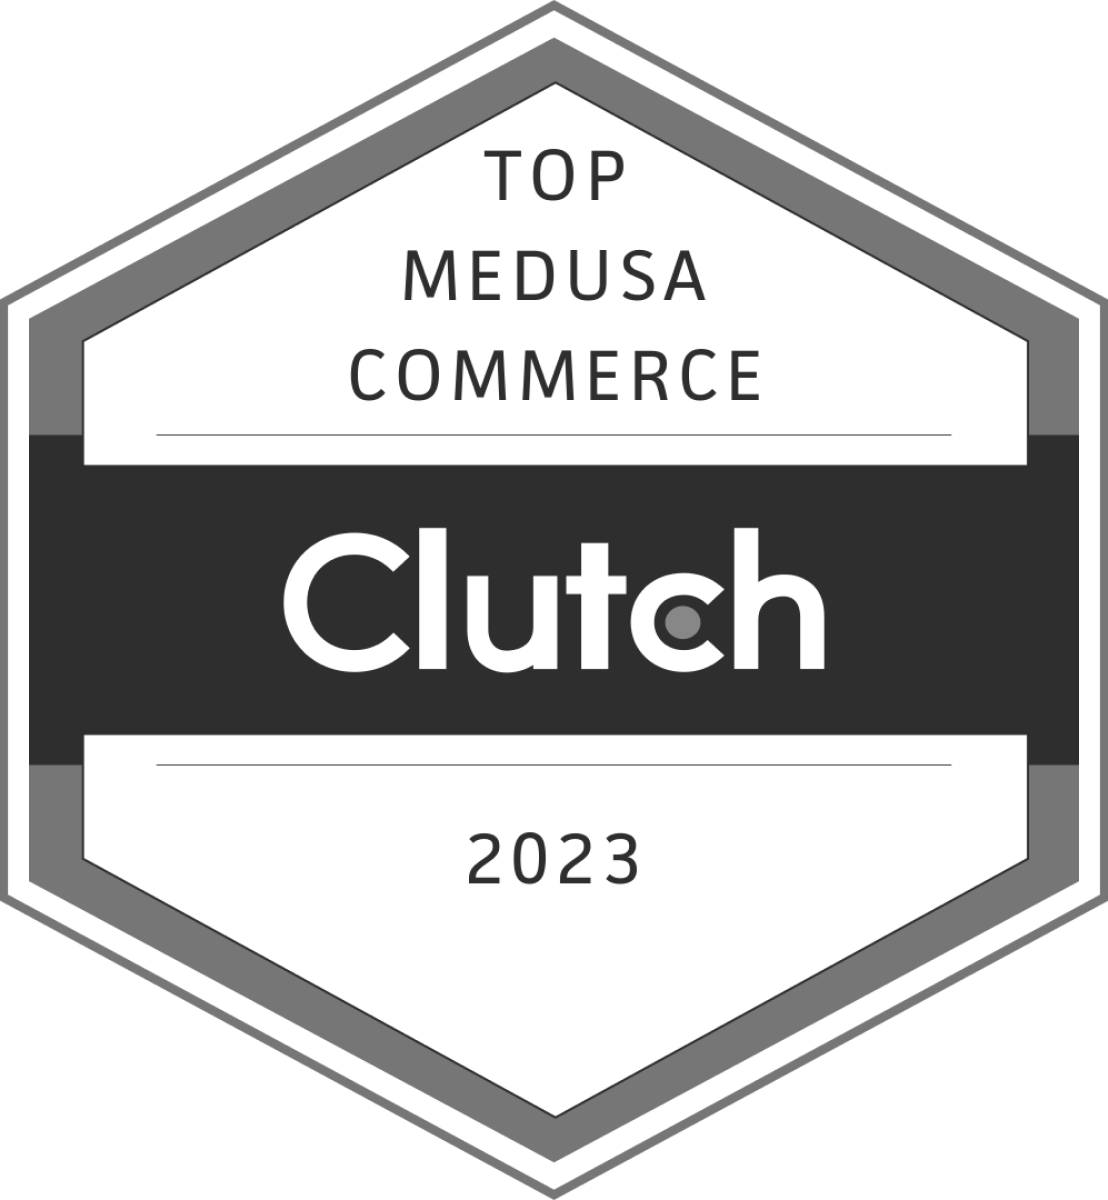 Clutch – Top Medusa Commerce 2023